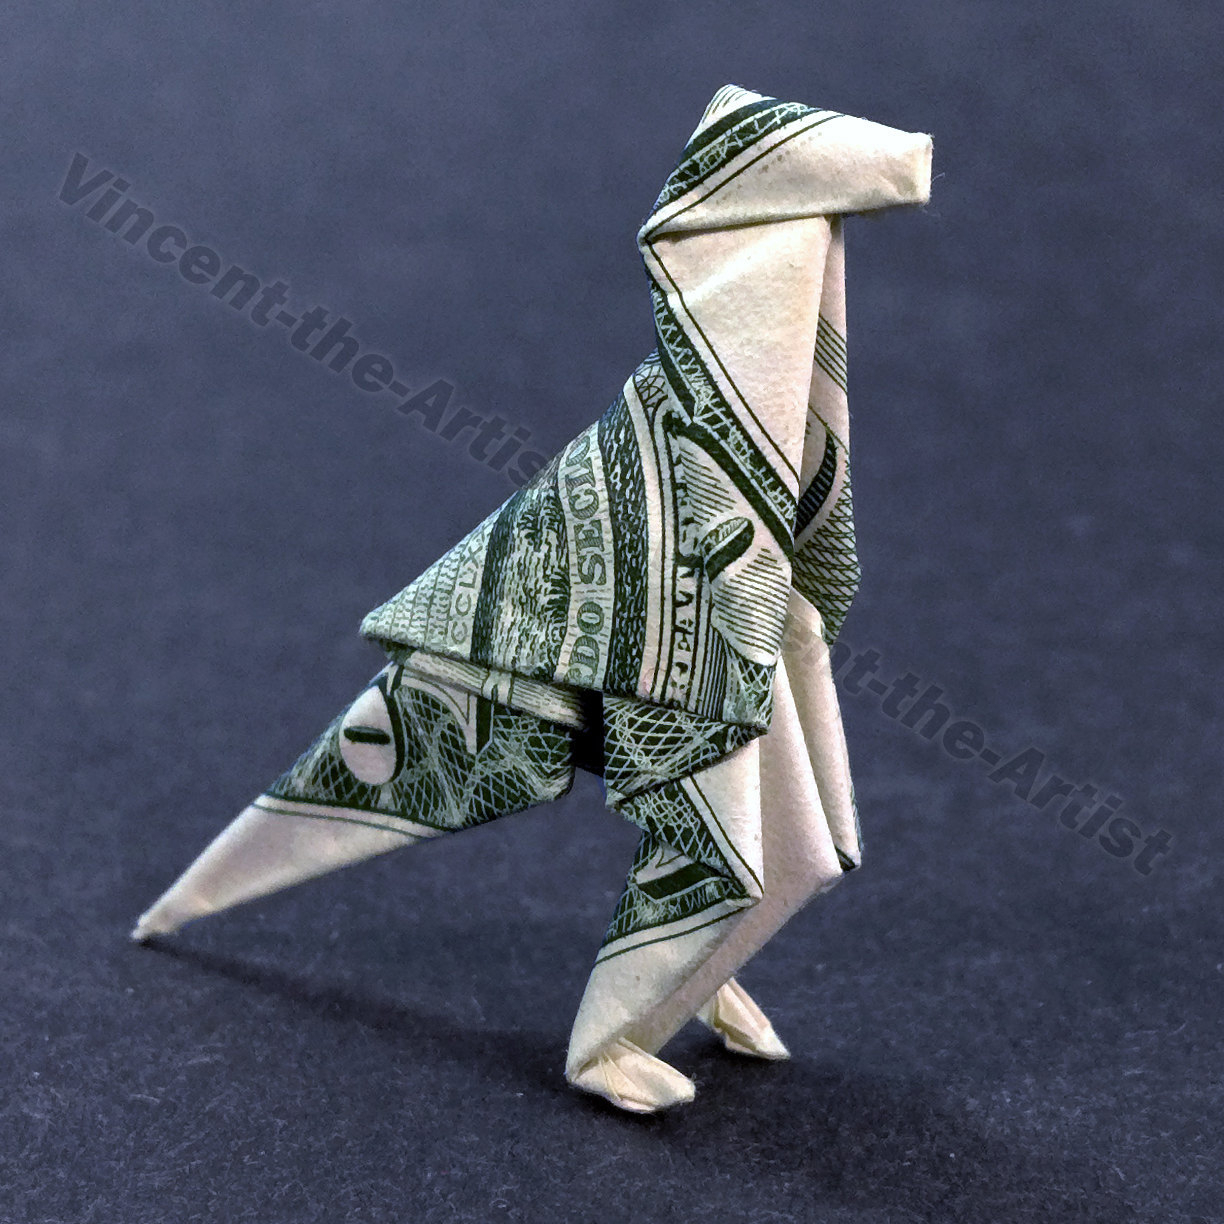 Dollar Bill Origami T Rex Money Origami Tyrannosaurus Rex Dollar Bill Art